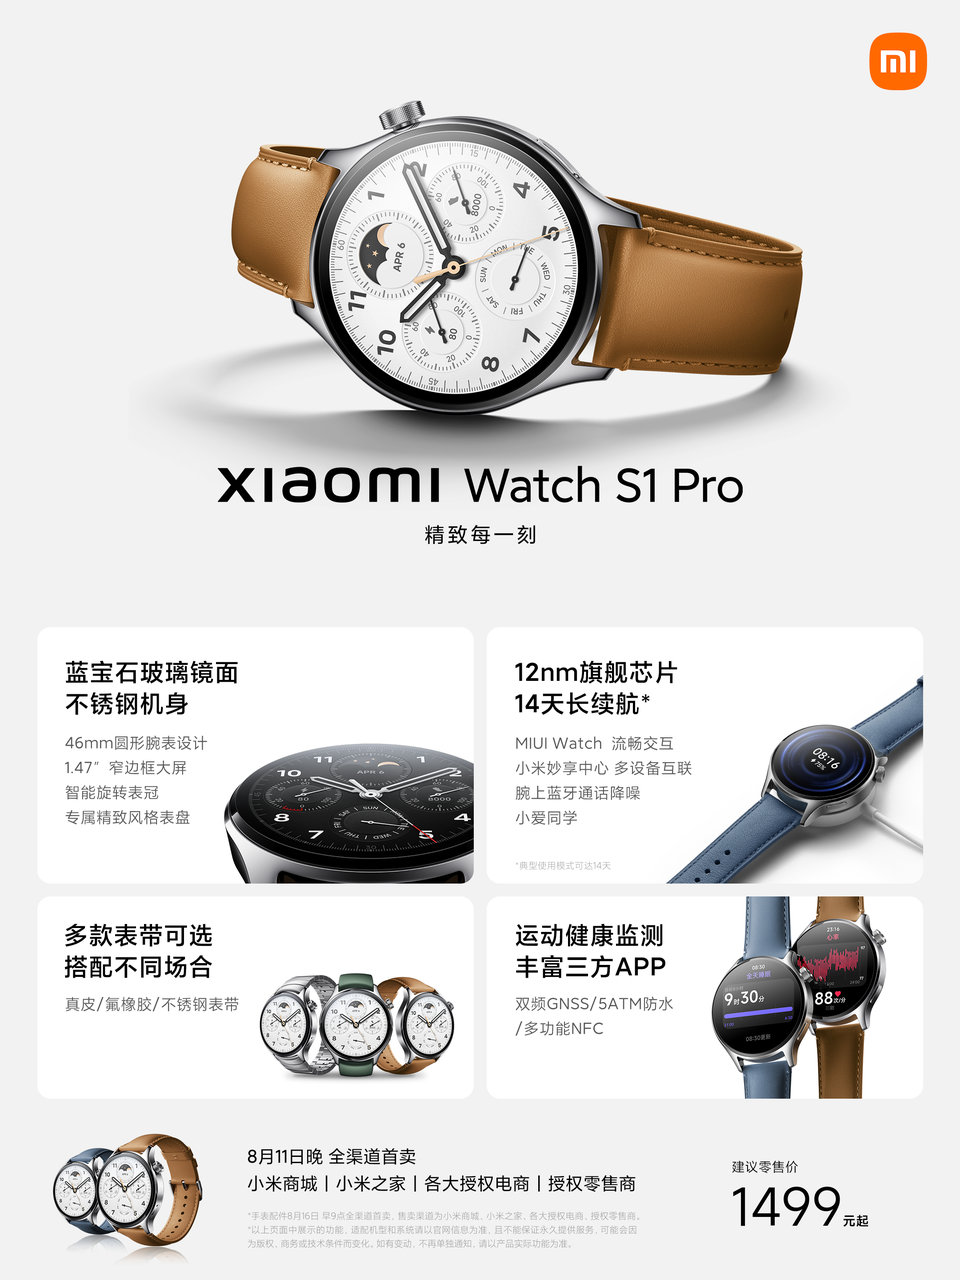 xiaomi watch s1 pro img6